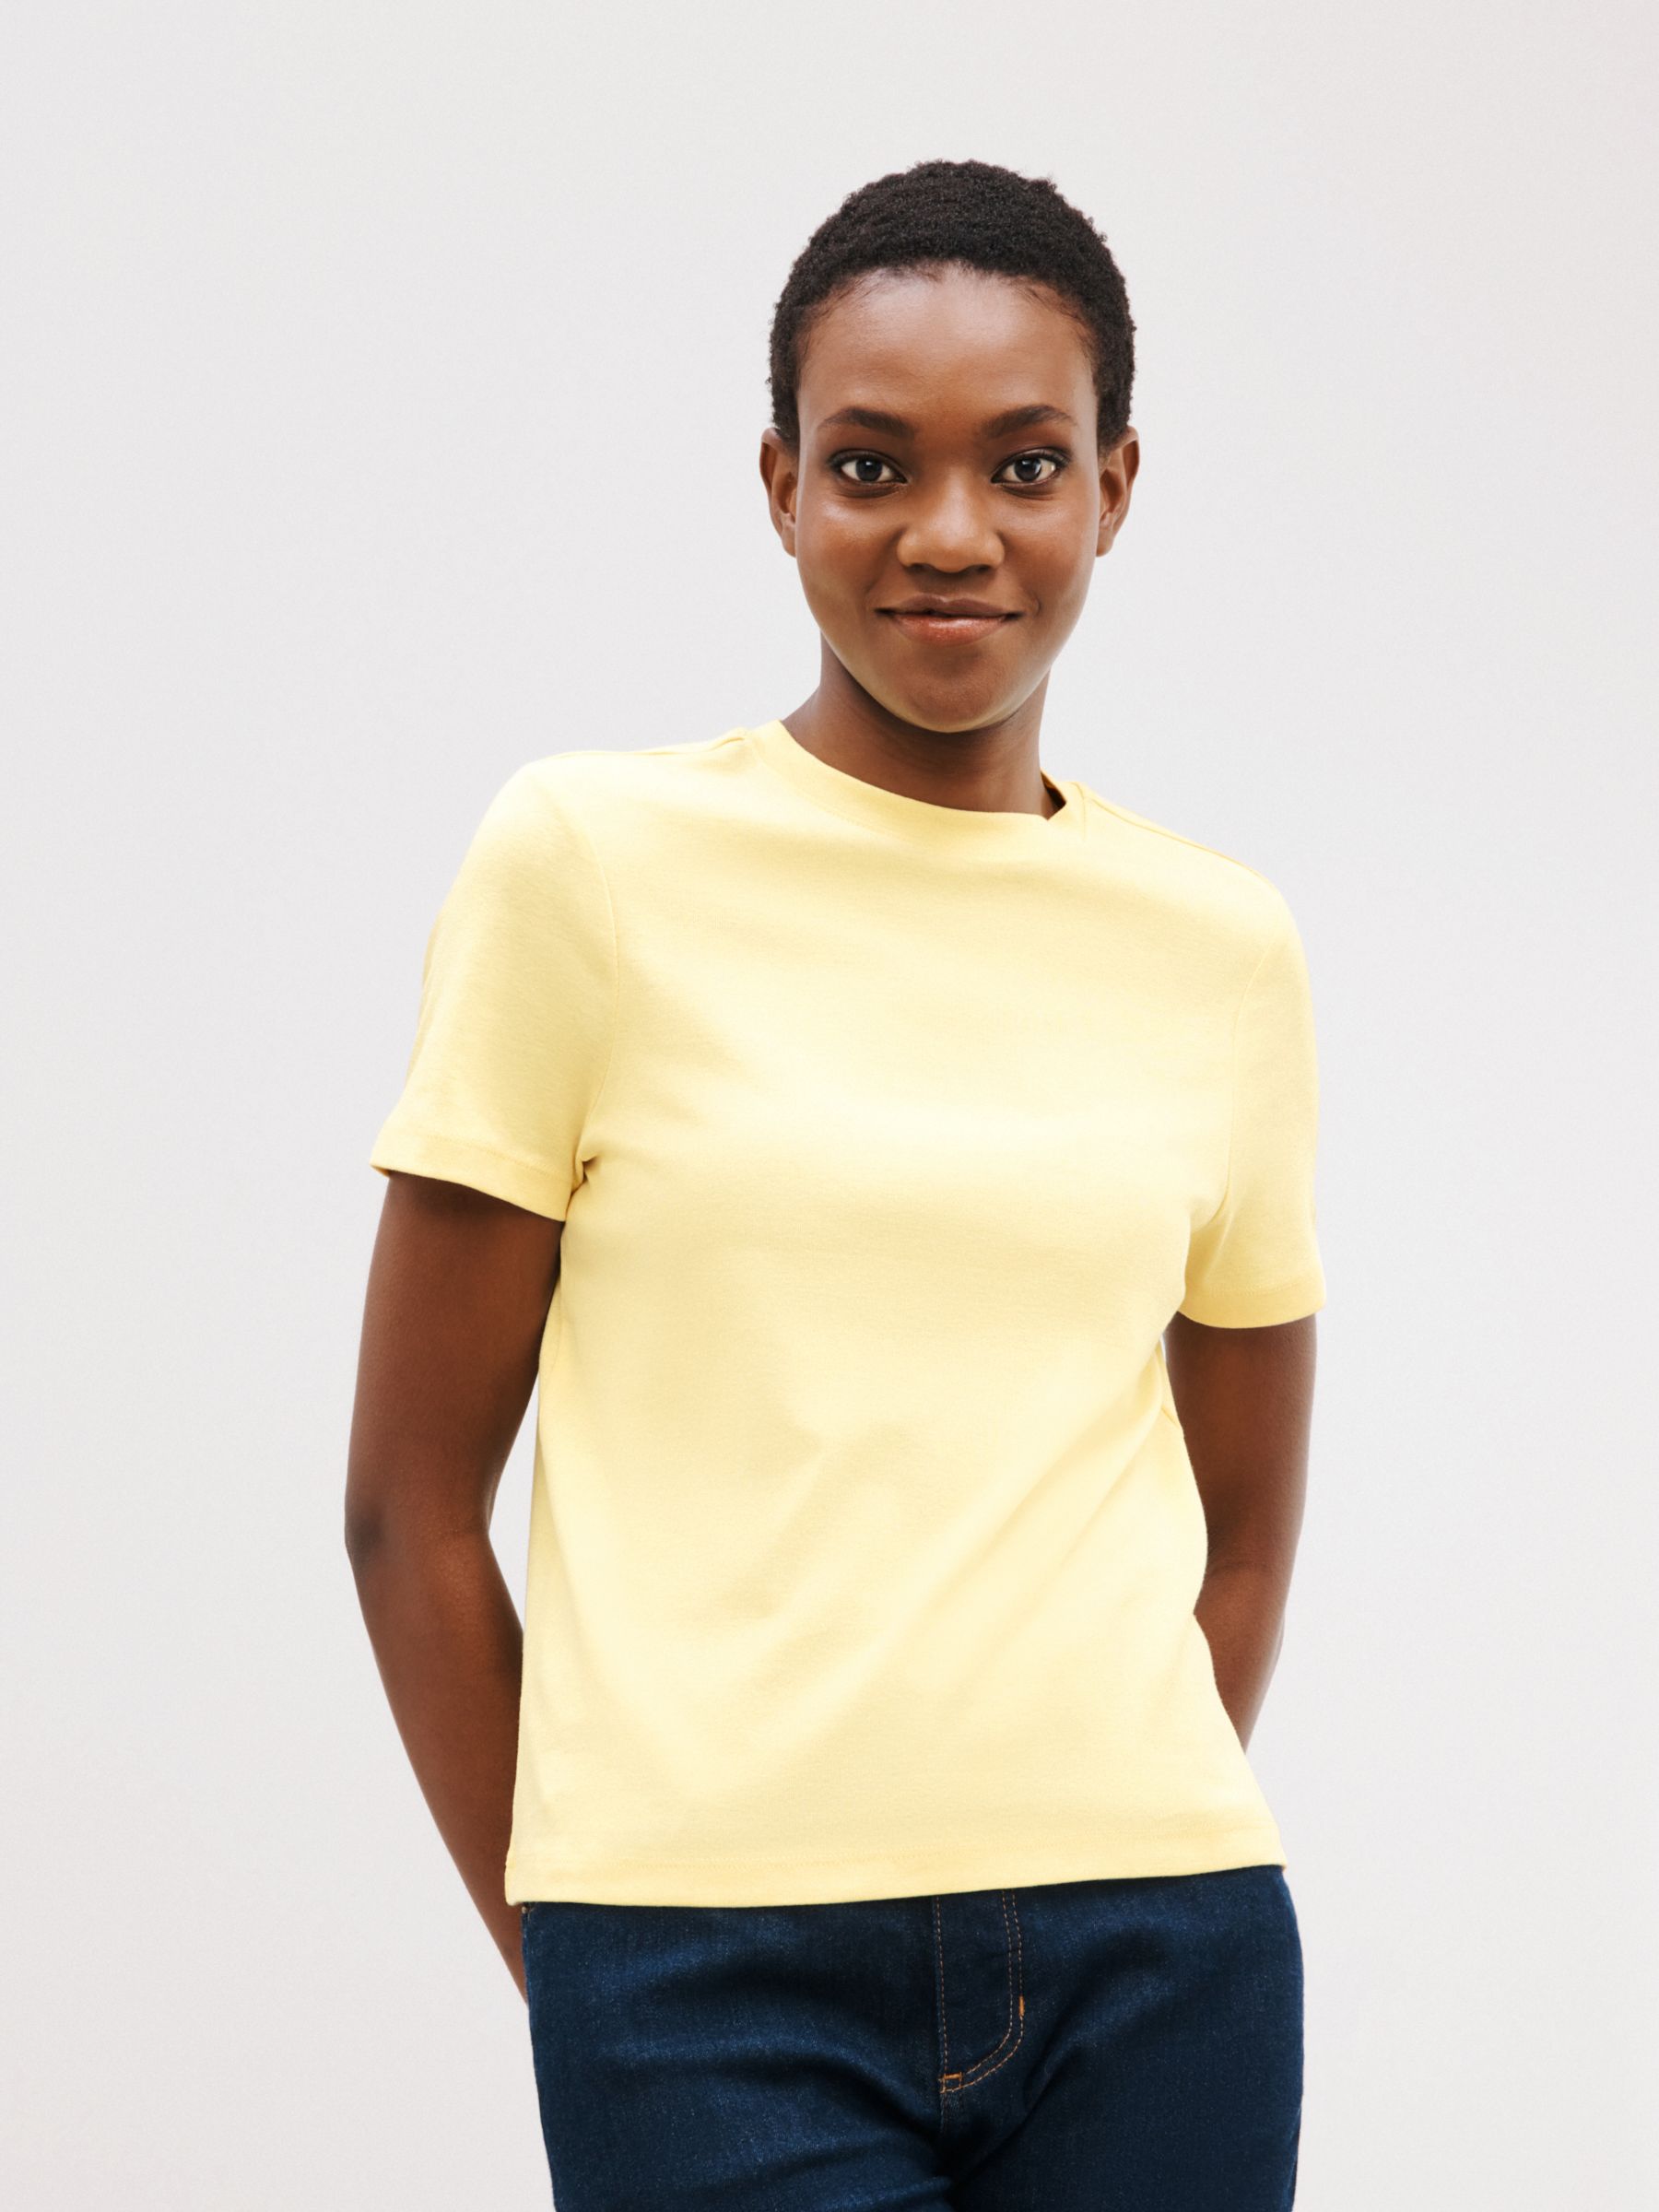 John Organic Cotton Short Sleeve Crew Neck T-Shirt, Light Yellow at Lewis & Partners